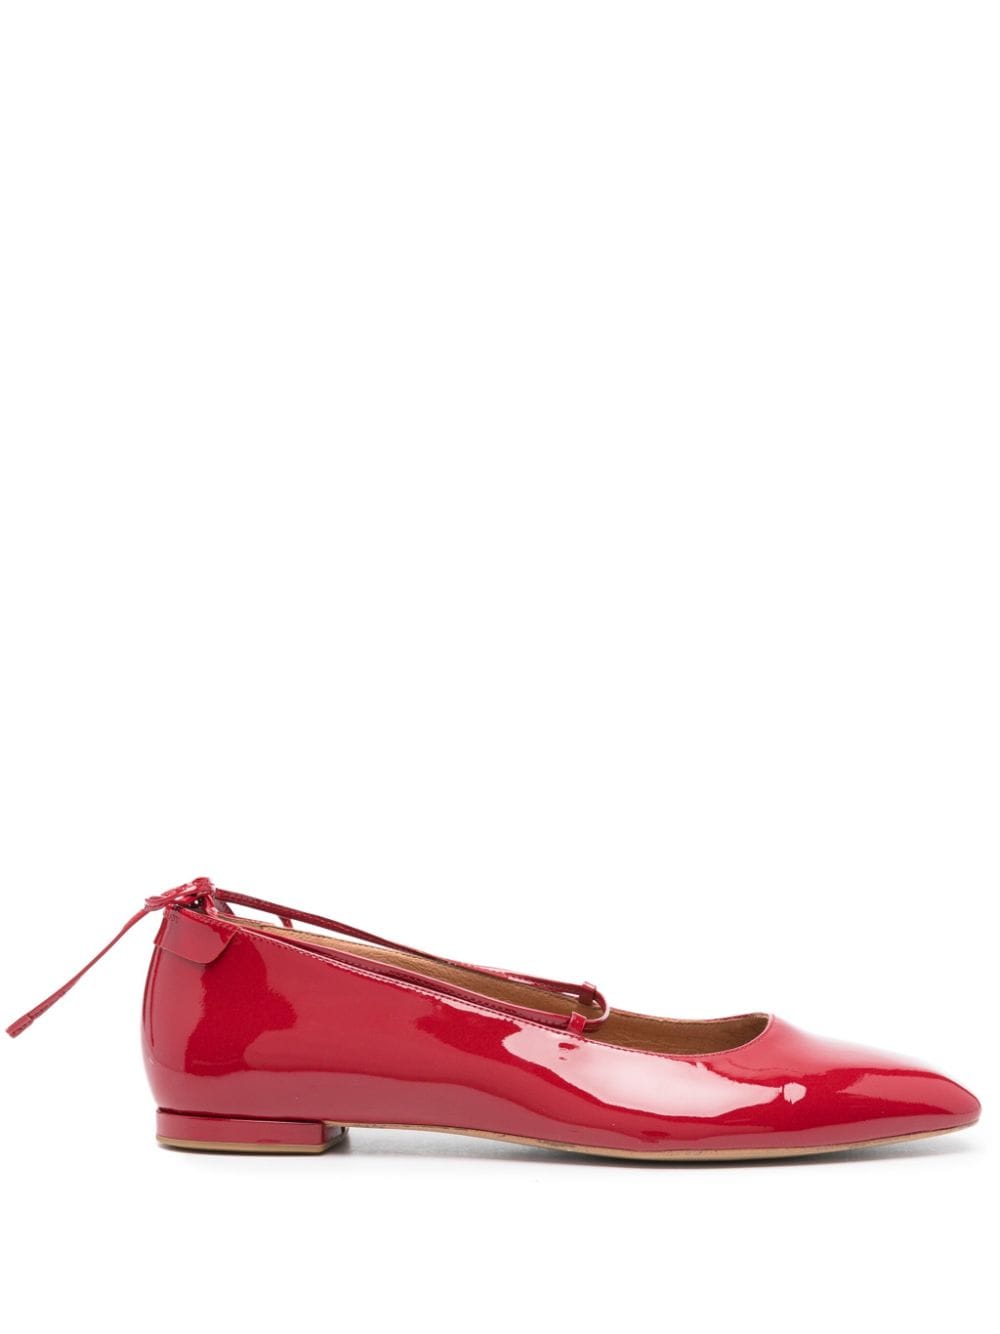 Claudie Pierlot patent leather ballerina shoes - Red von Claudie Pierlot